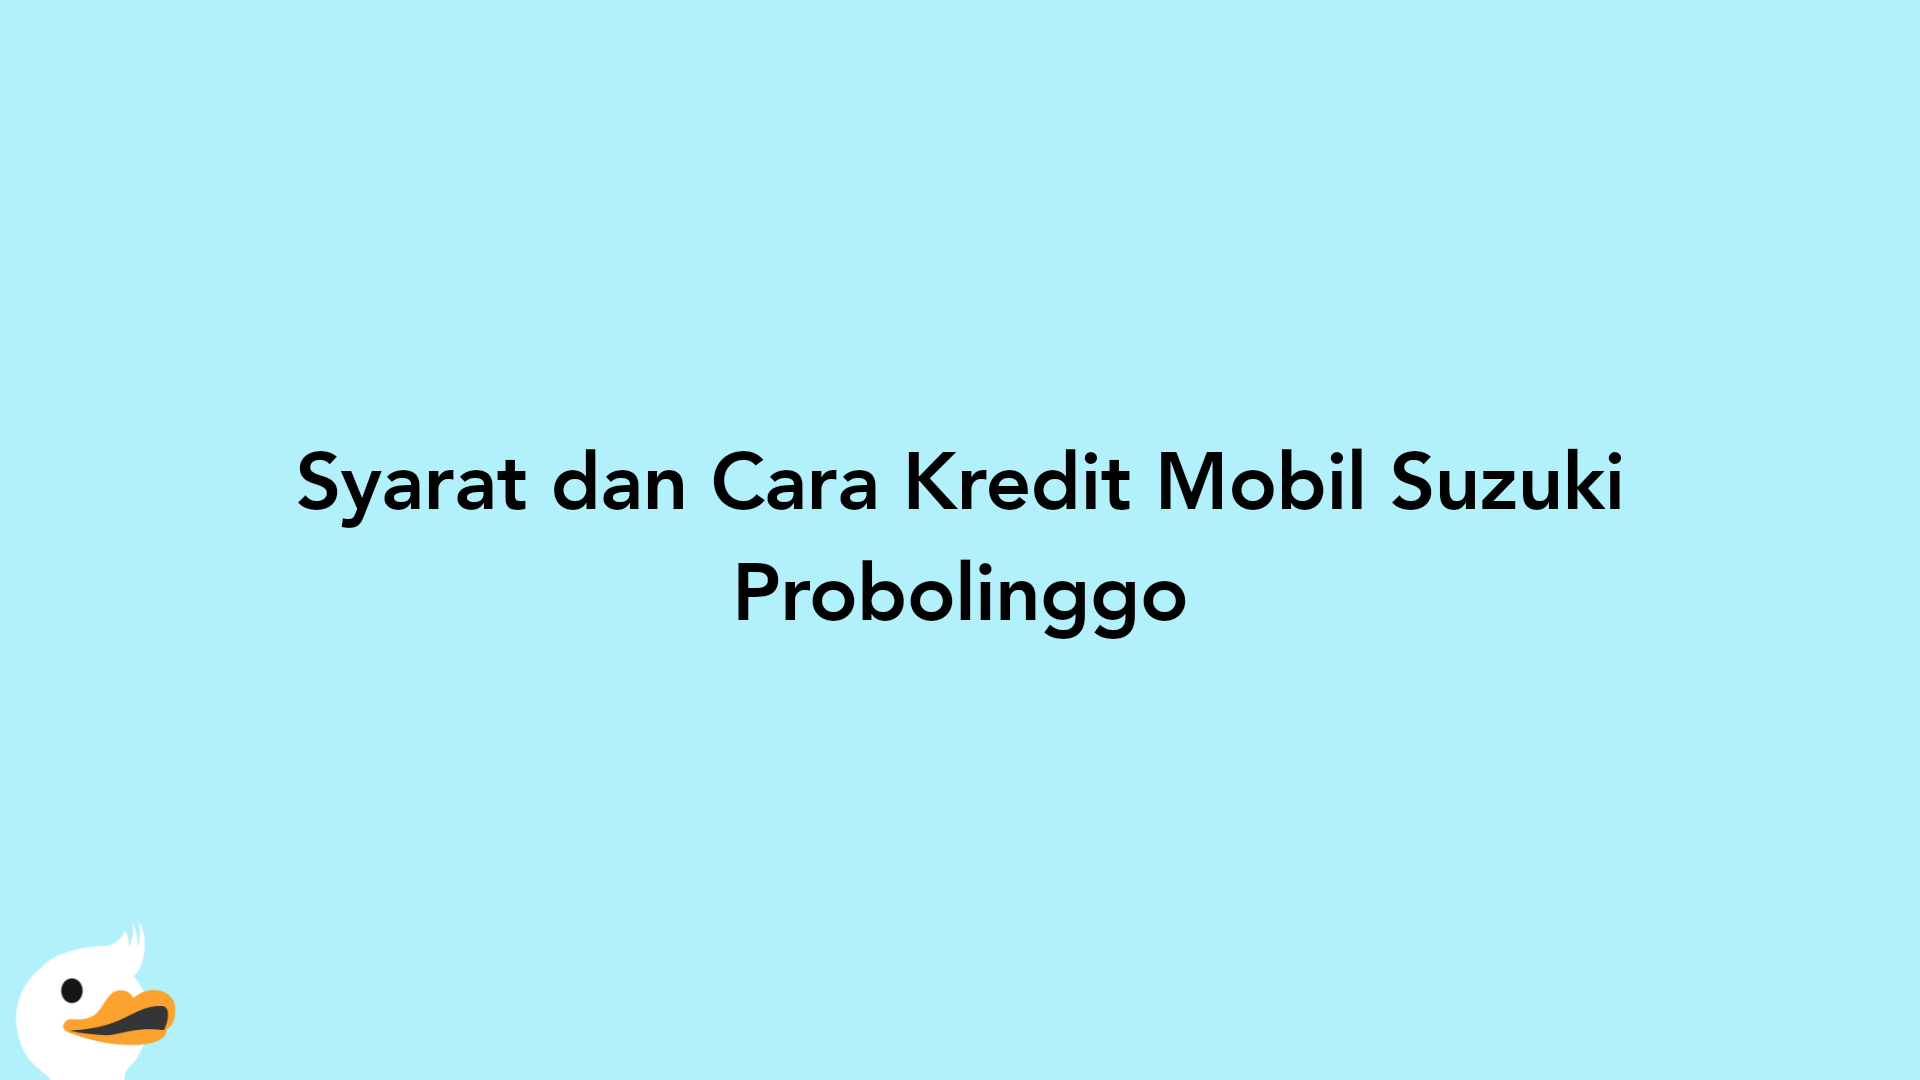 Syarat dan Cara Kredit Mobil Suzuki Probolinggo